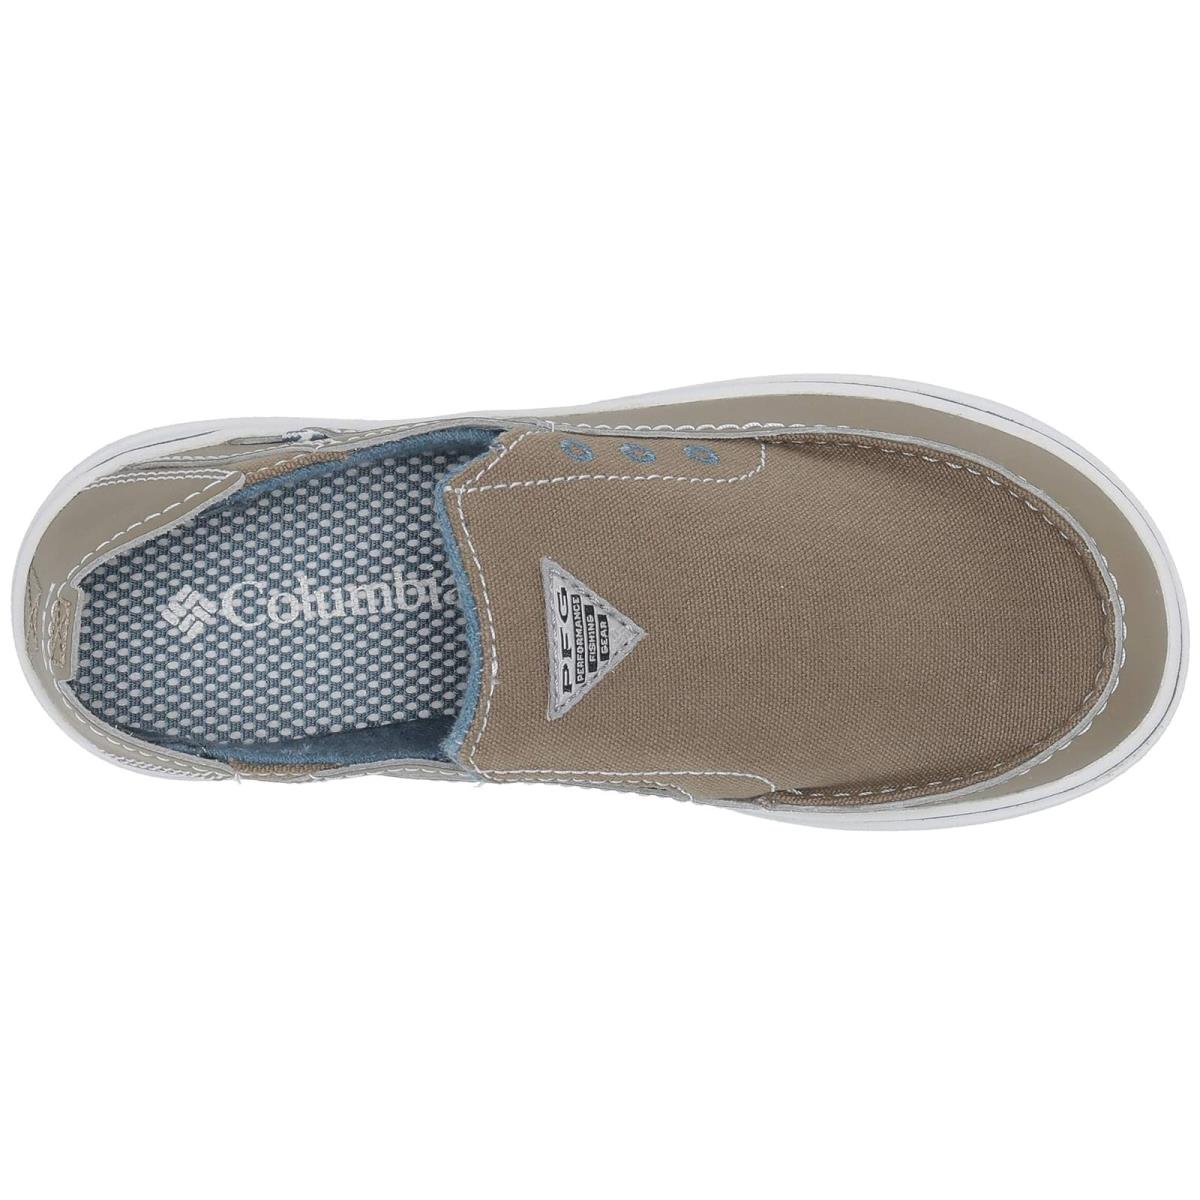 Columbia shoes  - Pebble/White 0